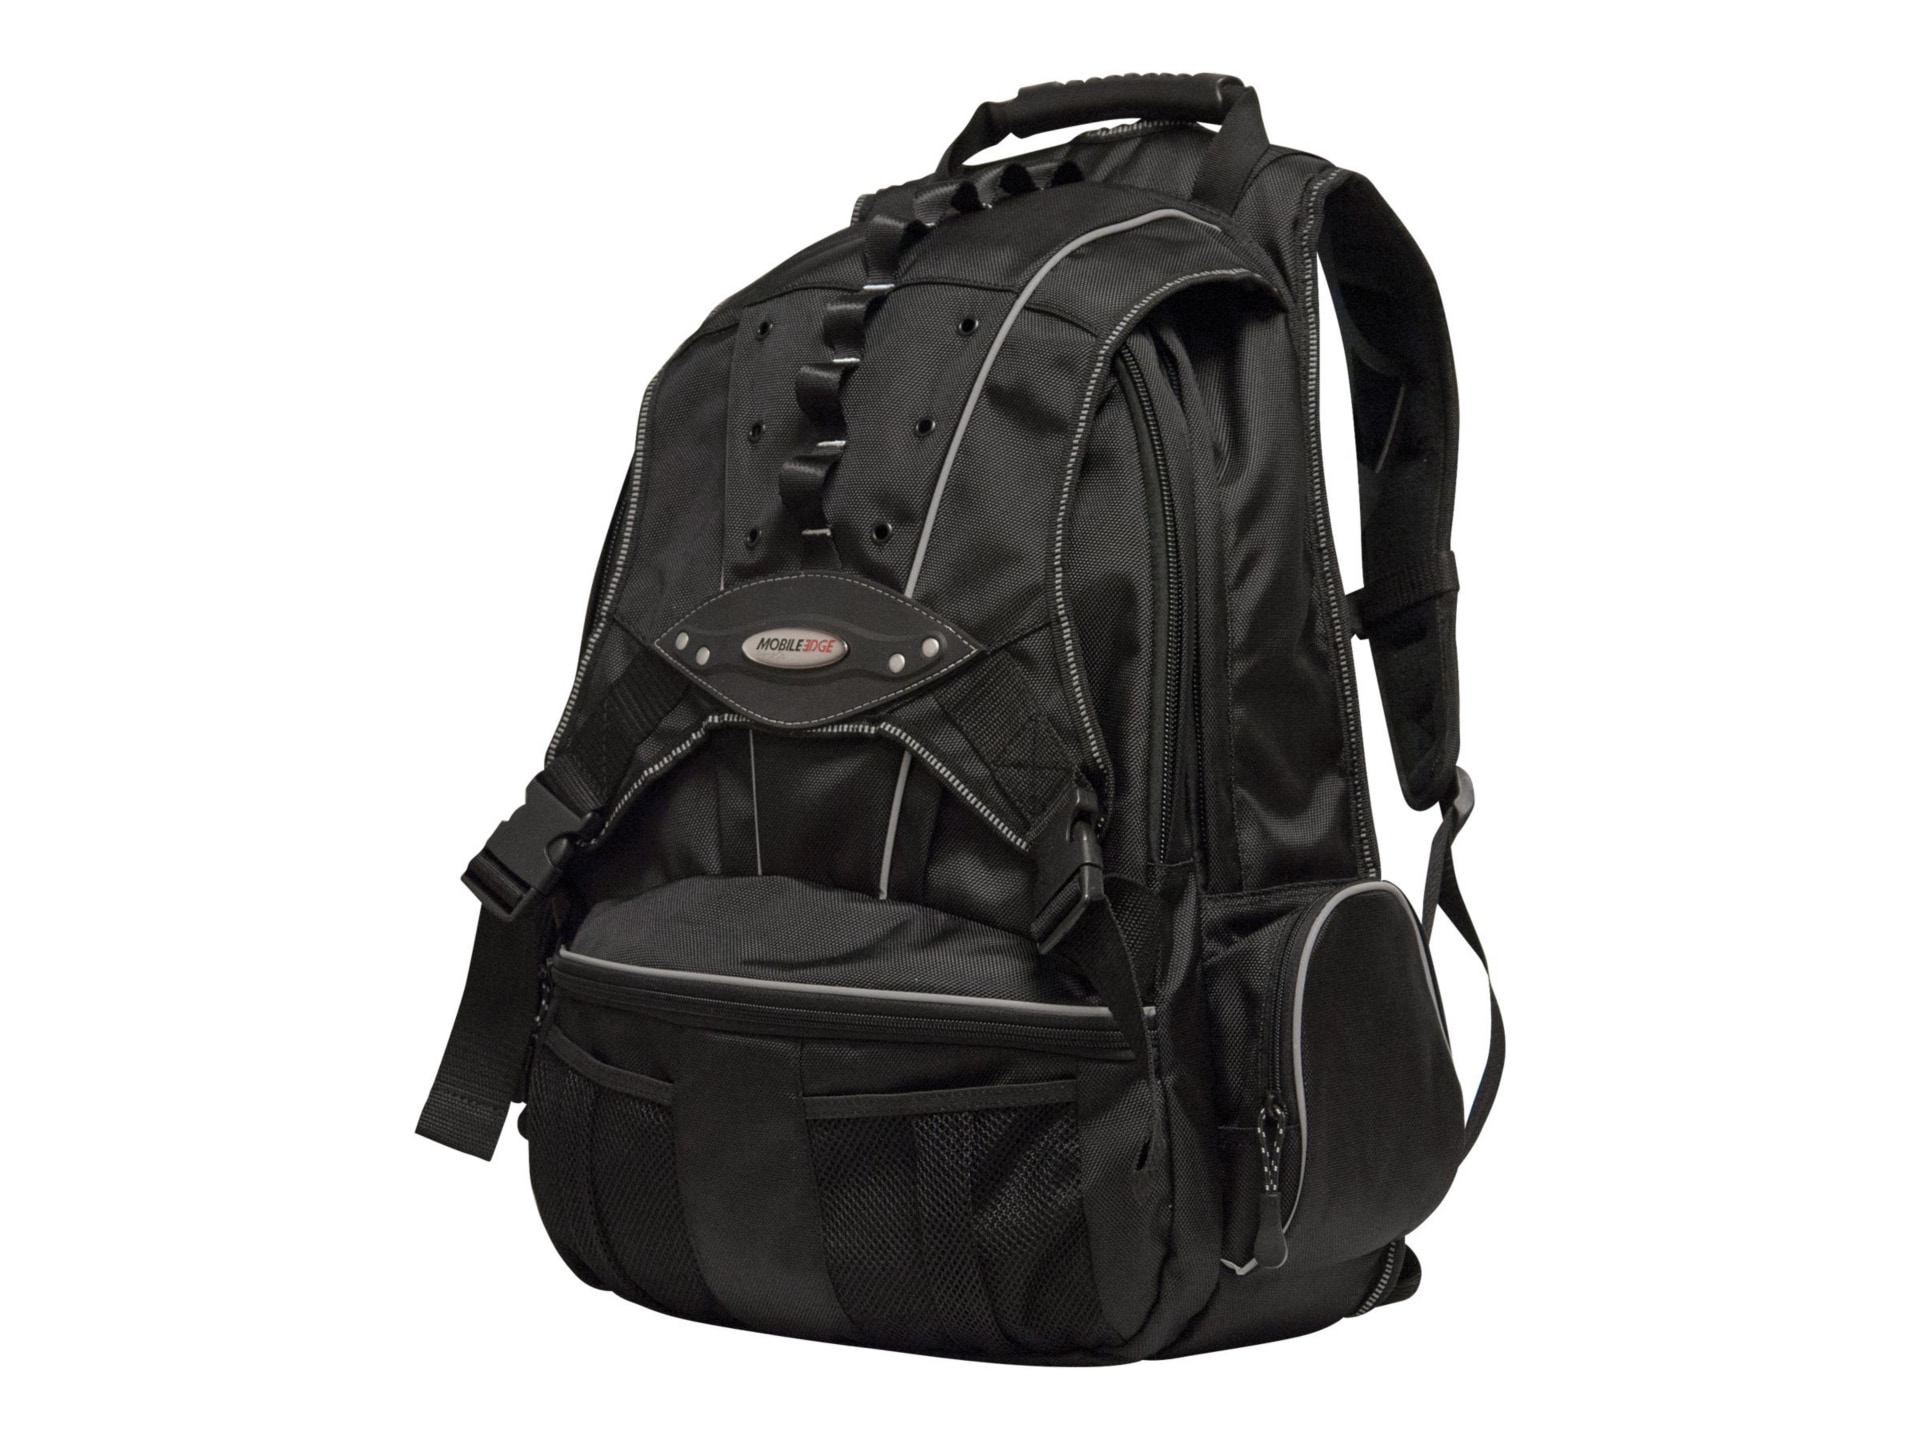 Mobile Edge Premium Backpack - Charcoal